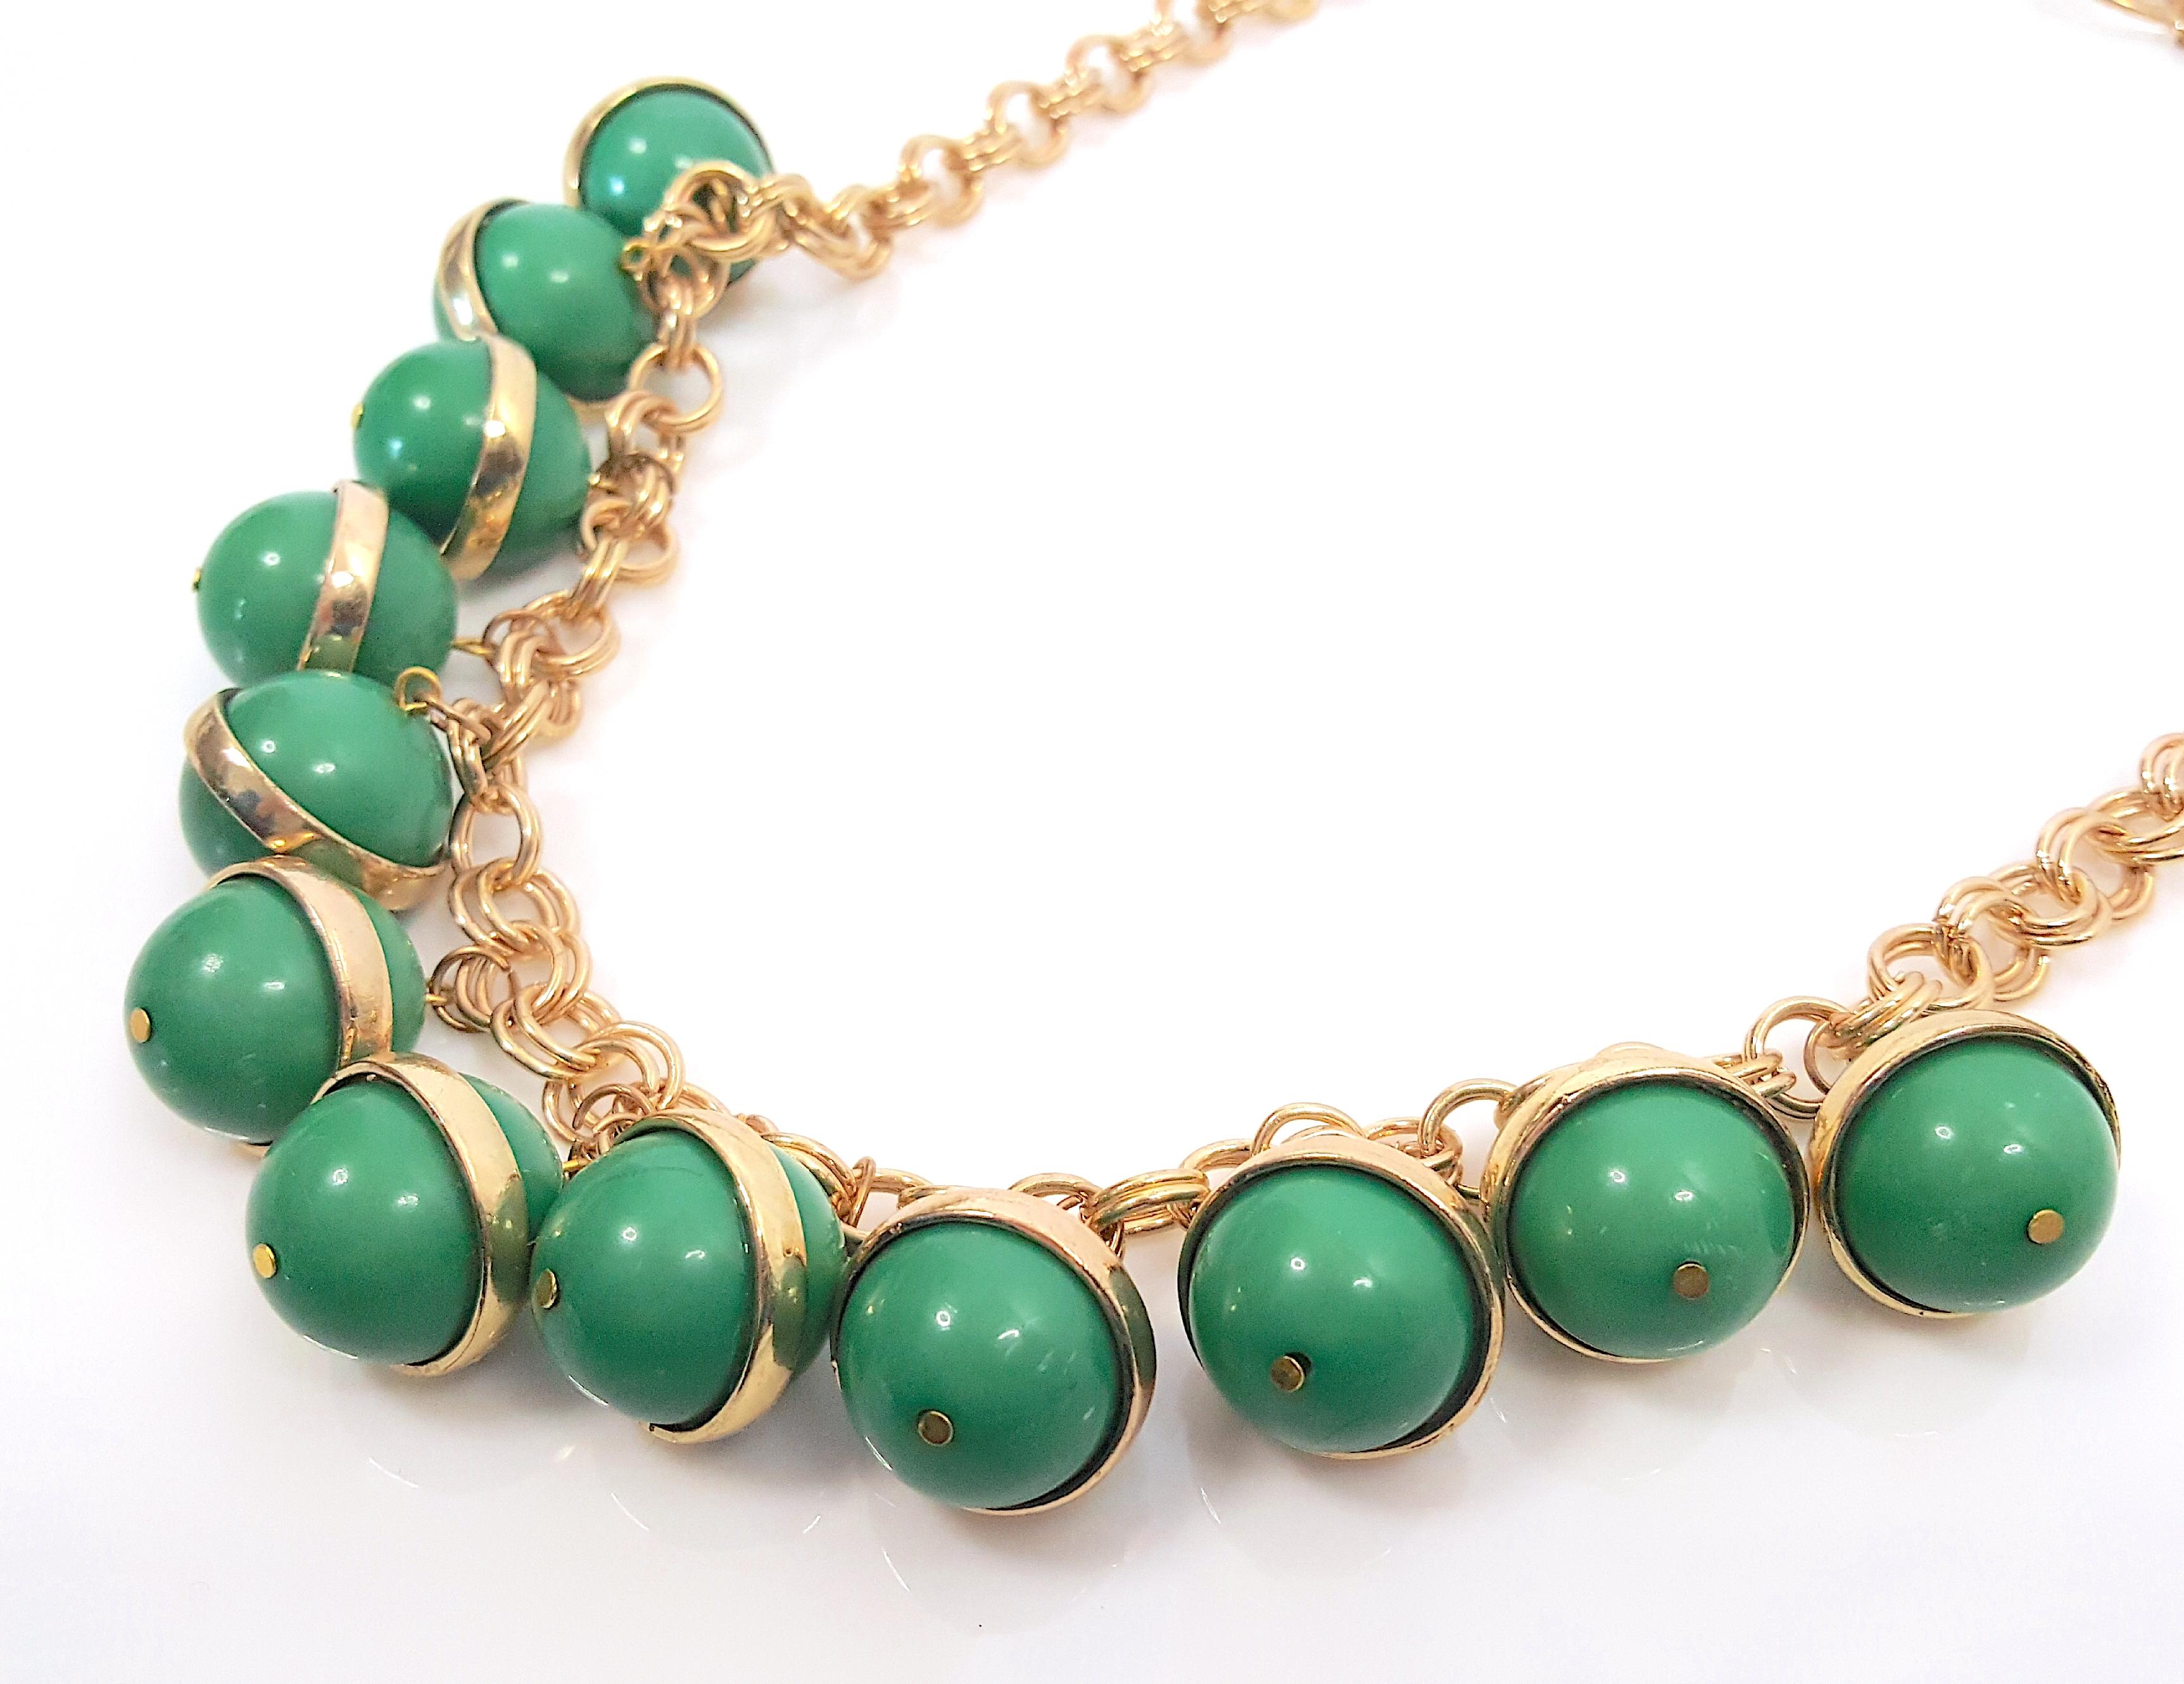 Bakelite 1930s German ArtDeco GoldRinged EmeraldBallPendants ChainLink Necklace For Sale 5